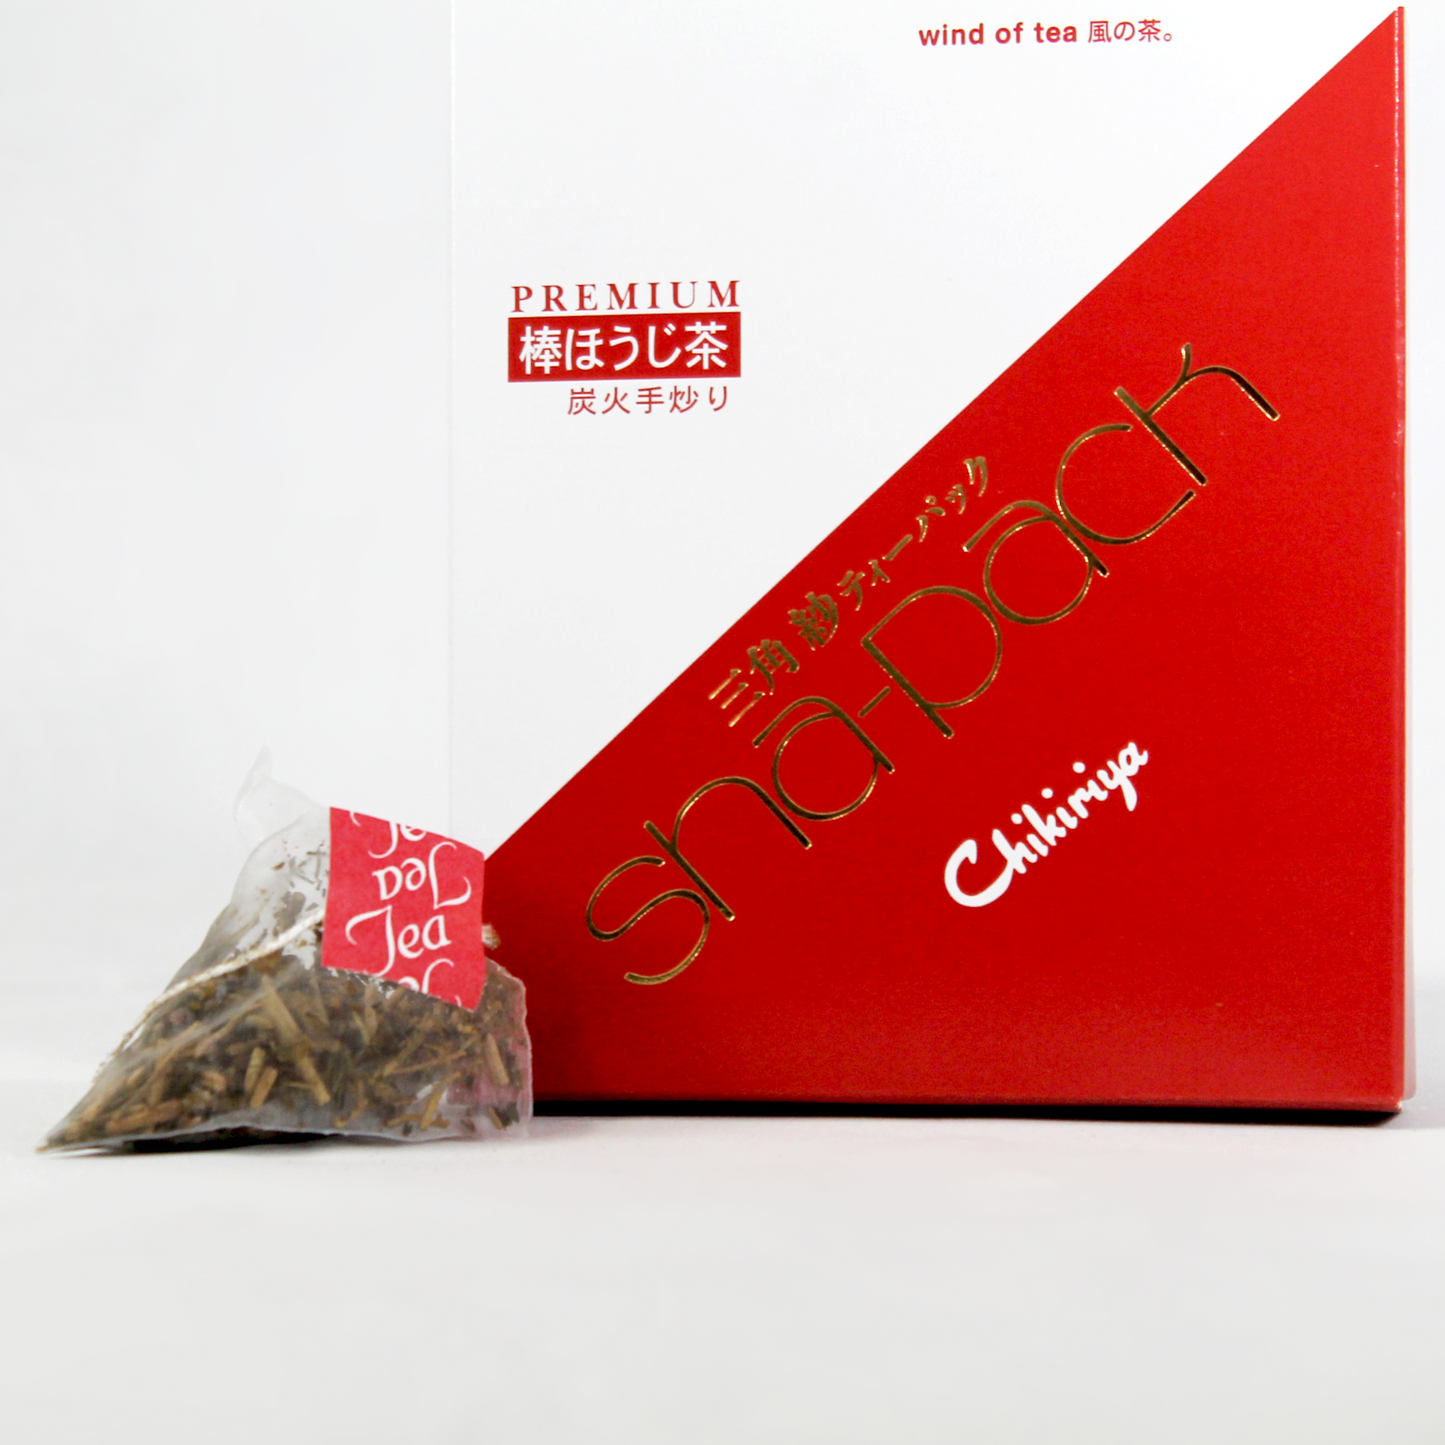 Premium Hojicha Rod (charcoal roasted by hand) - 12 Tea bags - Kaze no Cha series